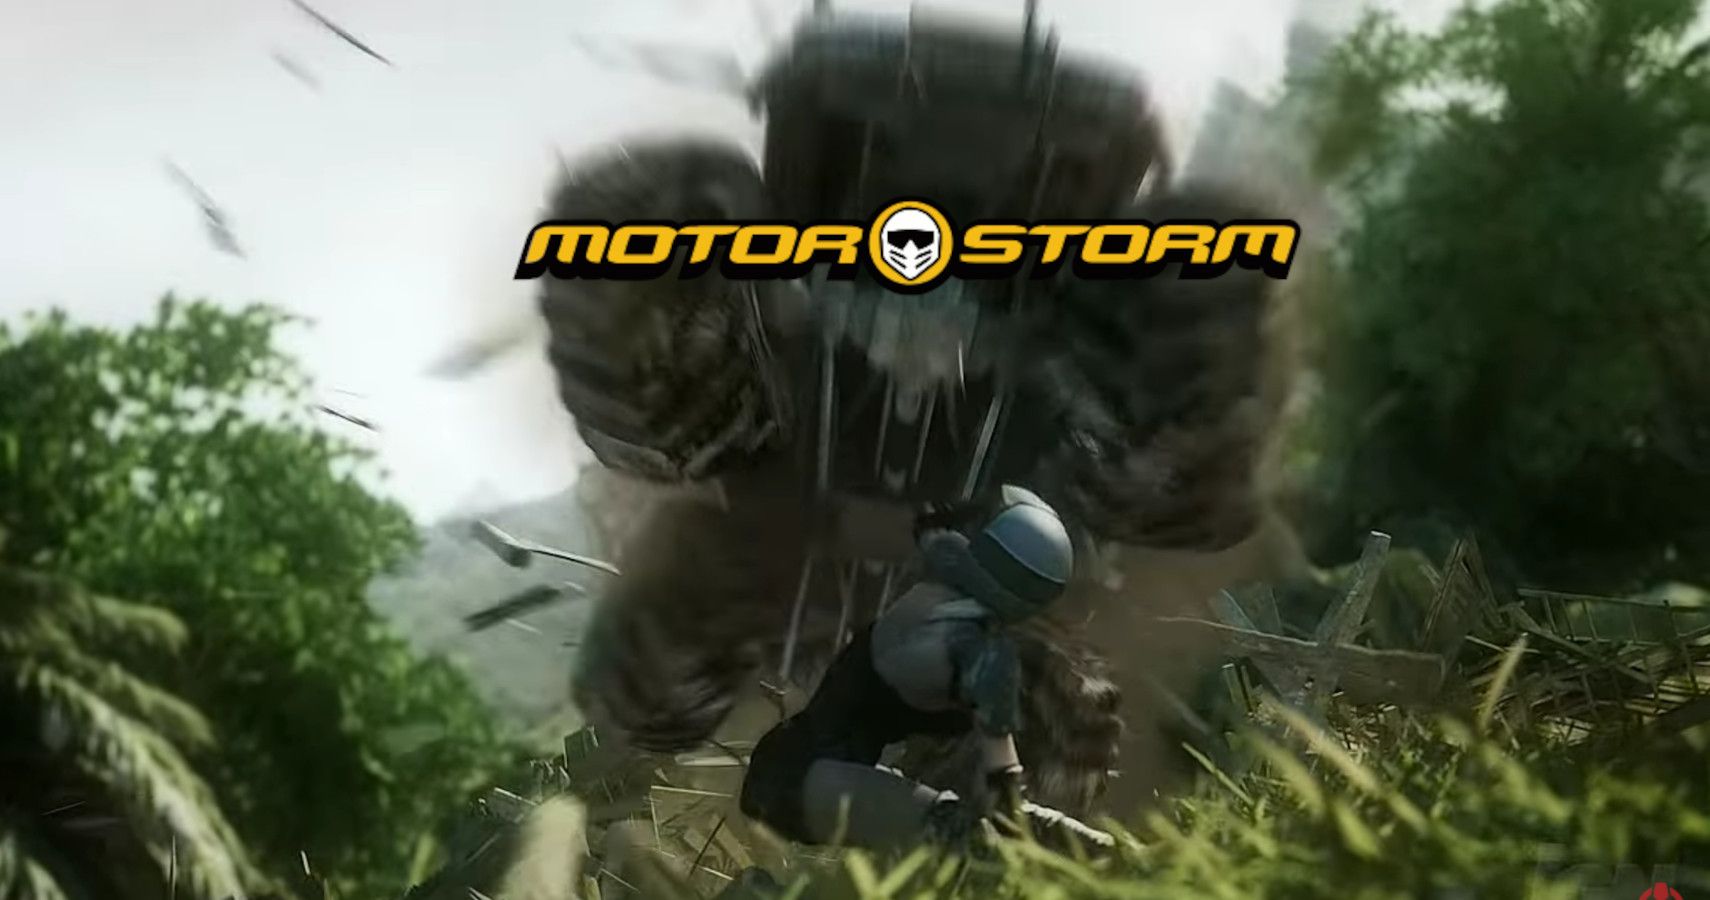 a monstertruck about to crush a motorbiker